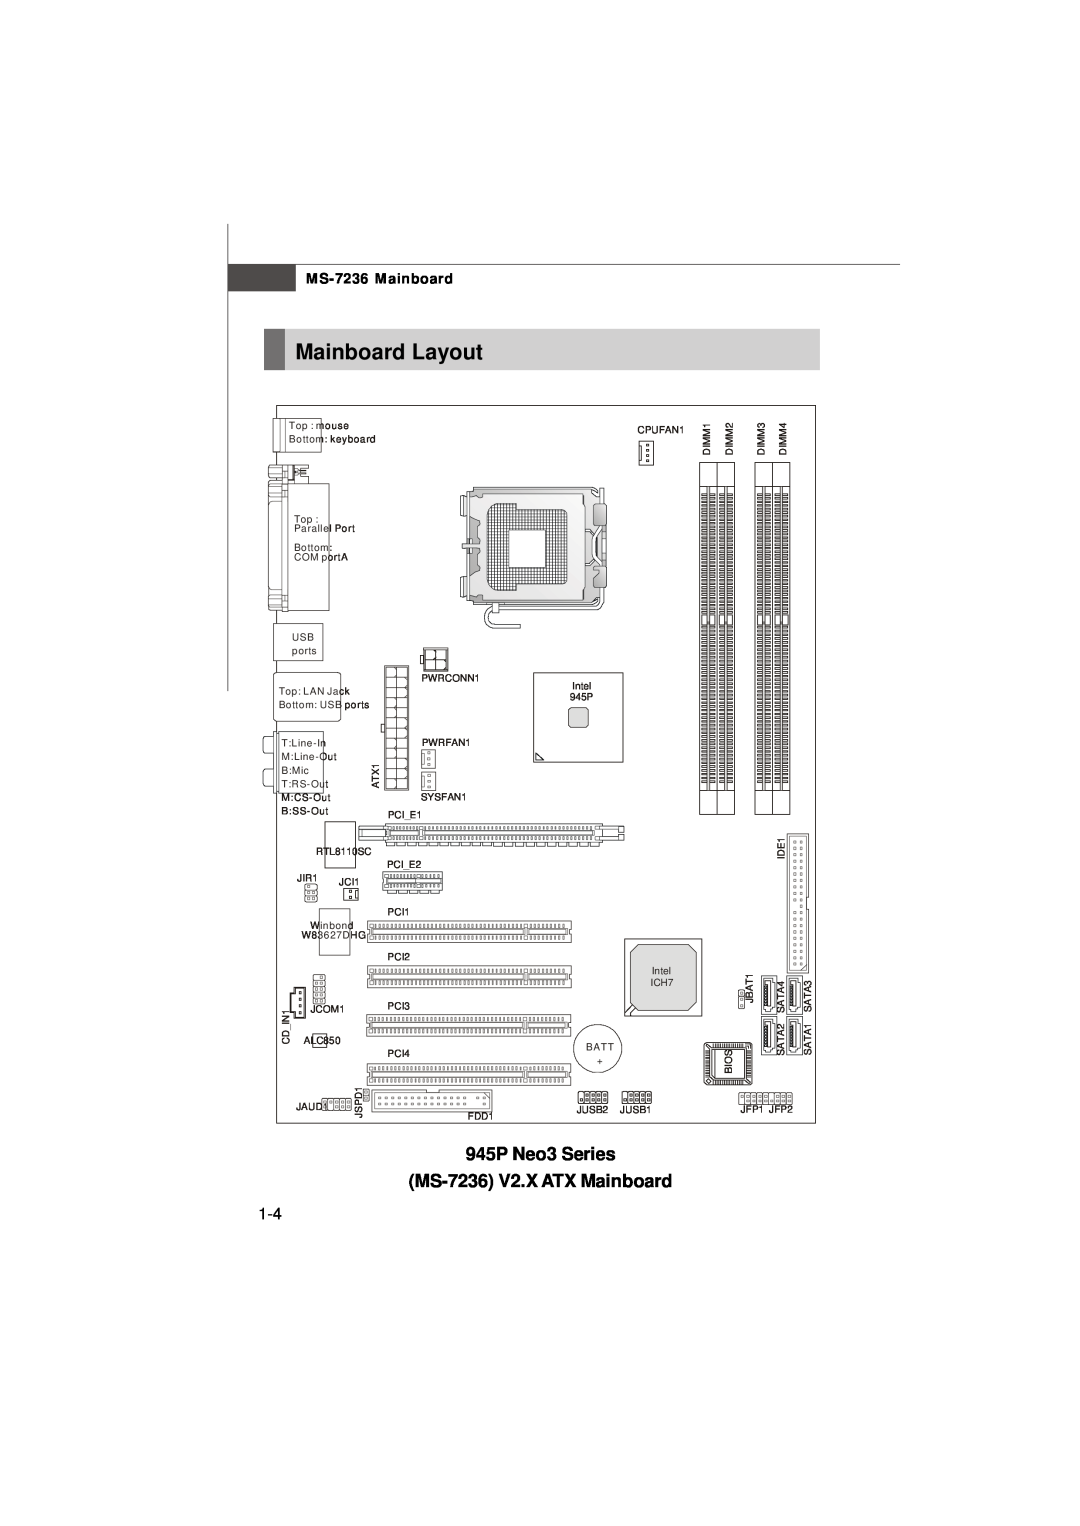 IBM G52-72361X2 manual Mainboard Layout, MS-7236 V2.X ATX Mainboard, 945P Neo3 Series, MS-7236 Mainboard 